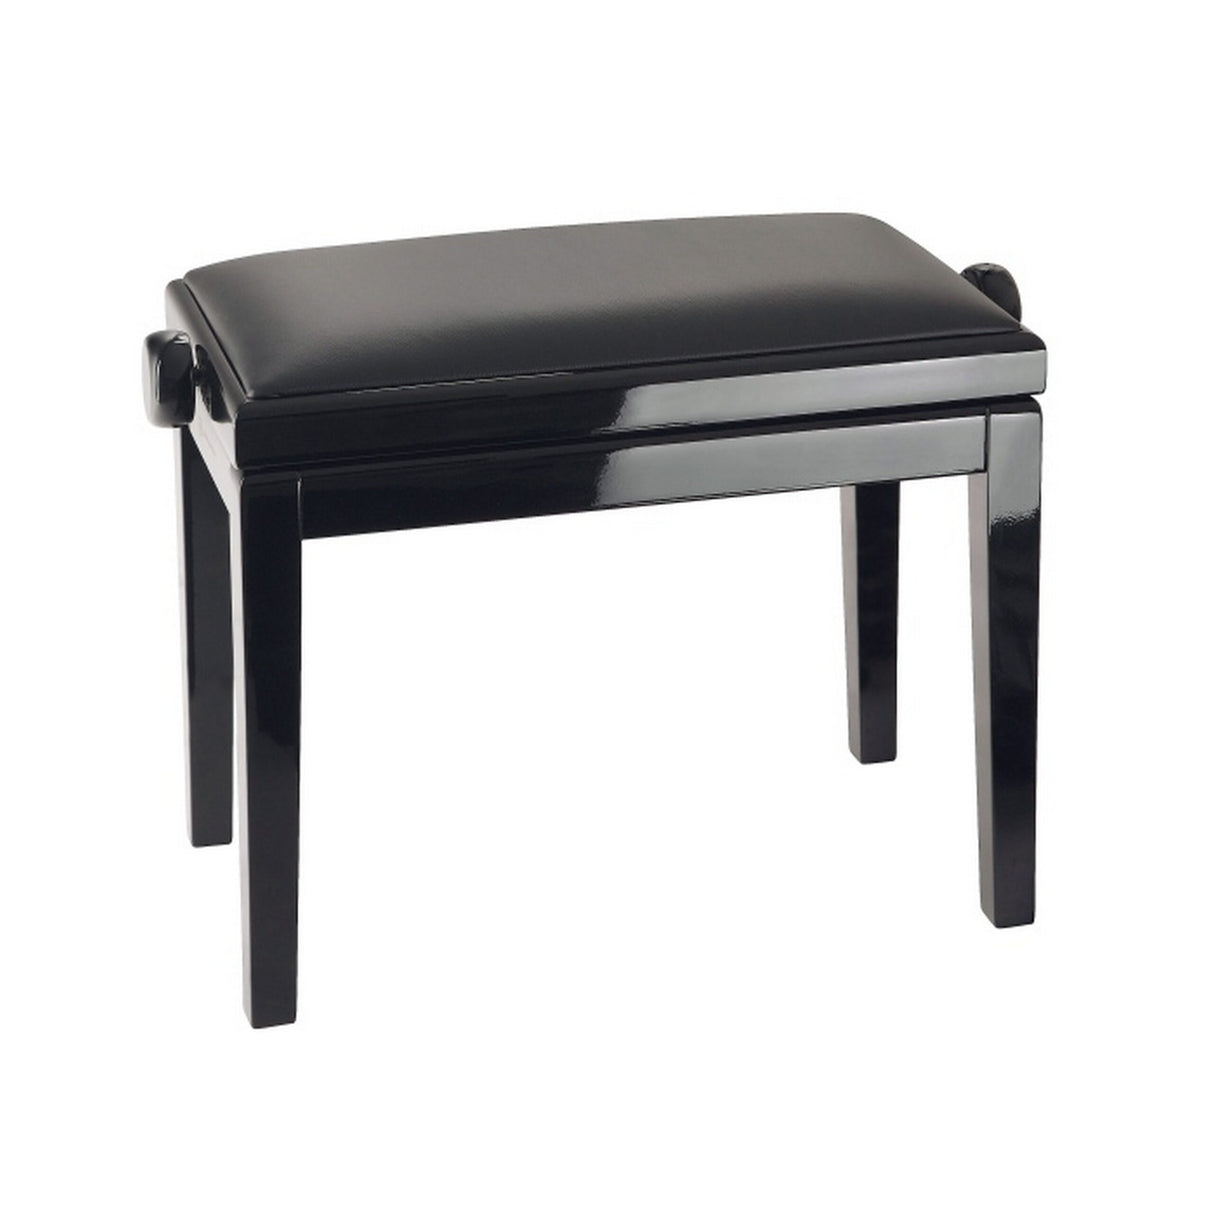 K&M 13990 Piano Bench, Black Glossy Finish Bench, Black Imitation Leather Seat